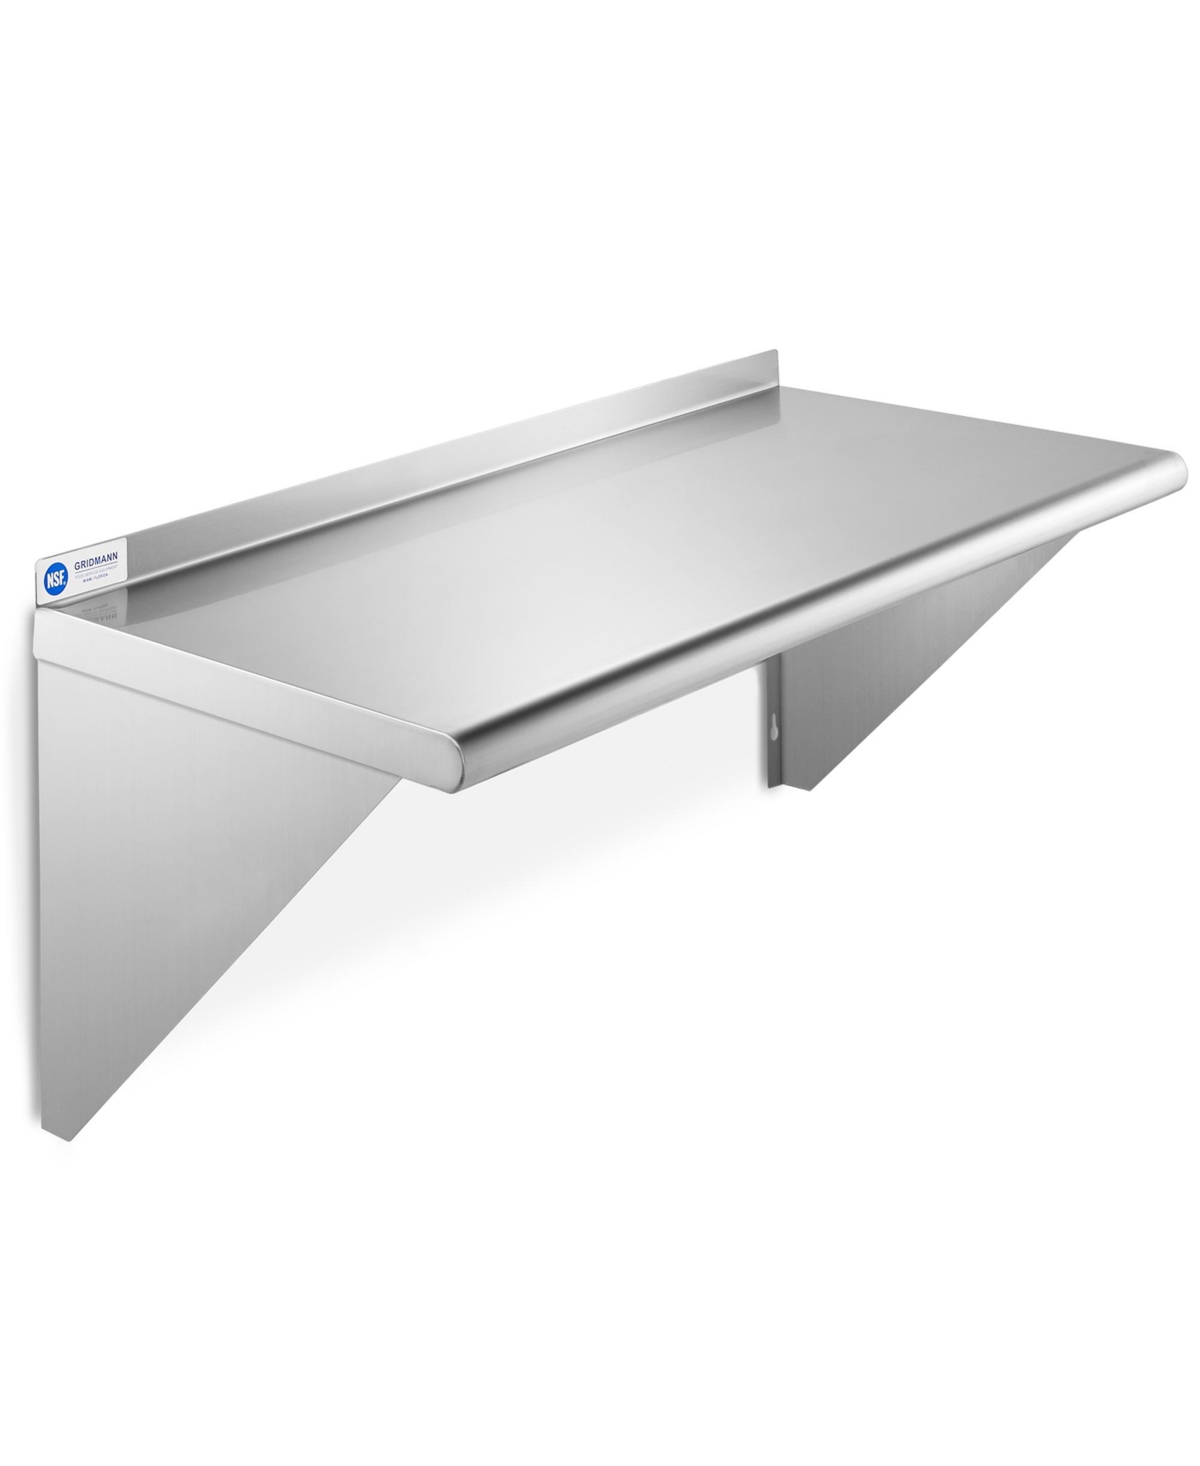 12" x 24" Nsf Stainless Steel Kitchen Wall Mount Shelf w/ Backsplash - Silver